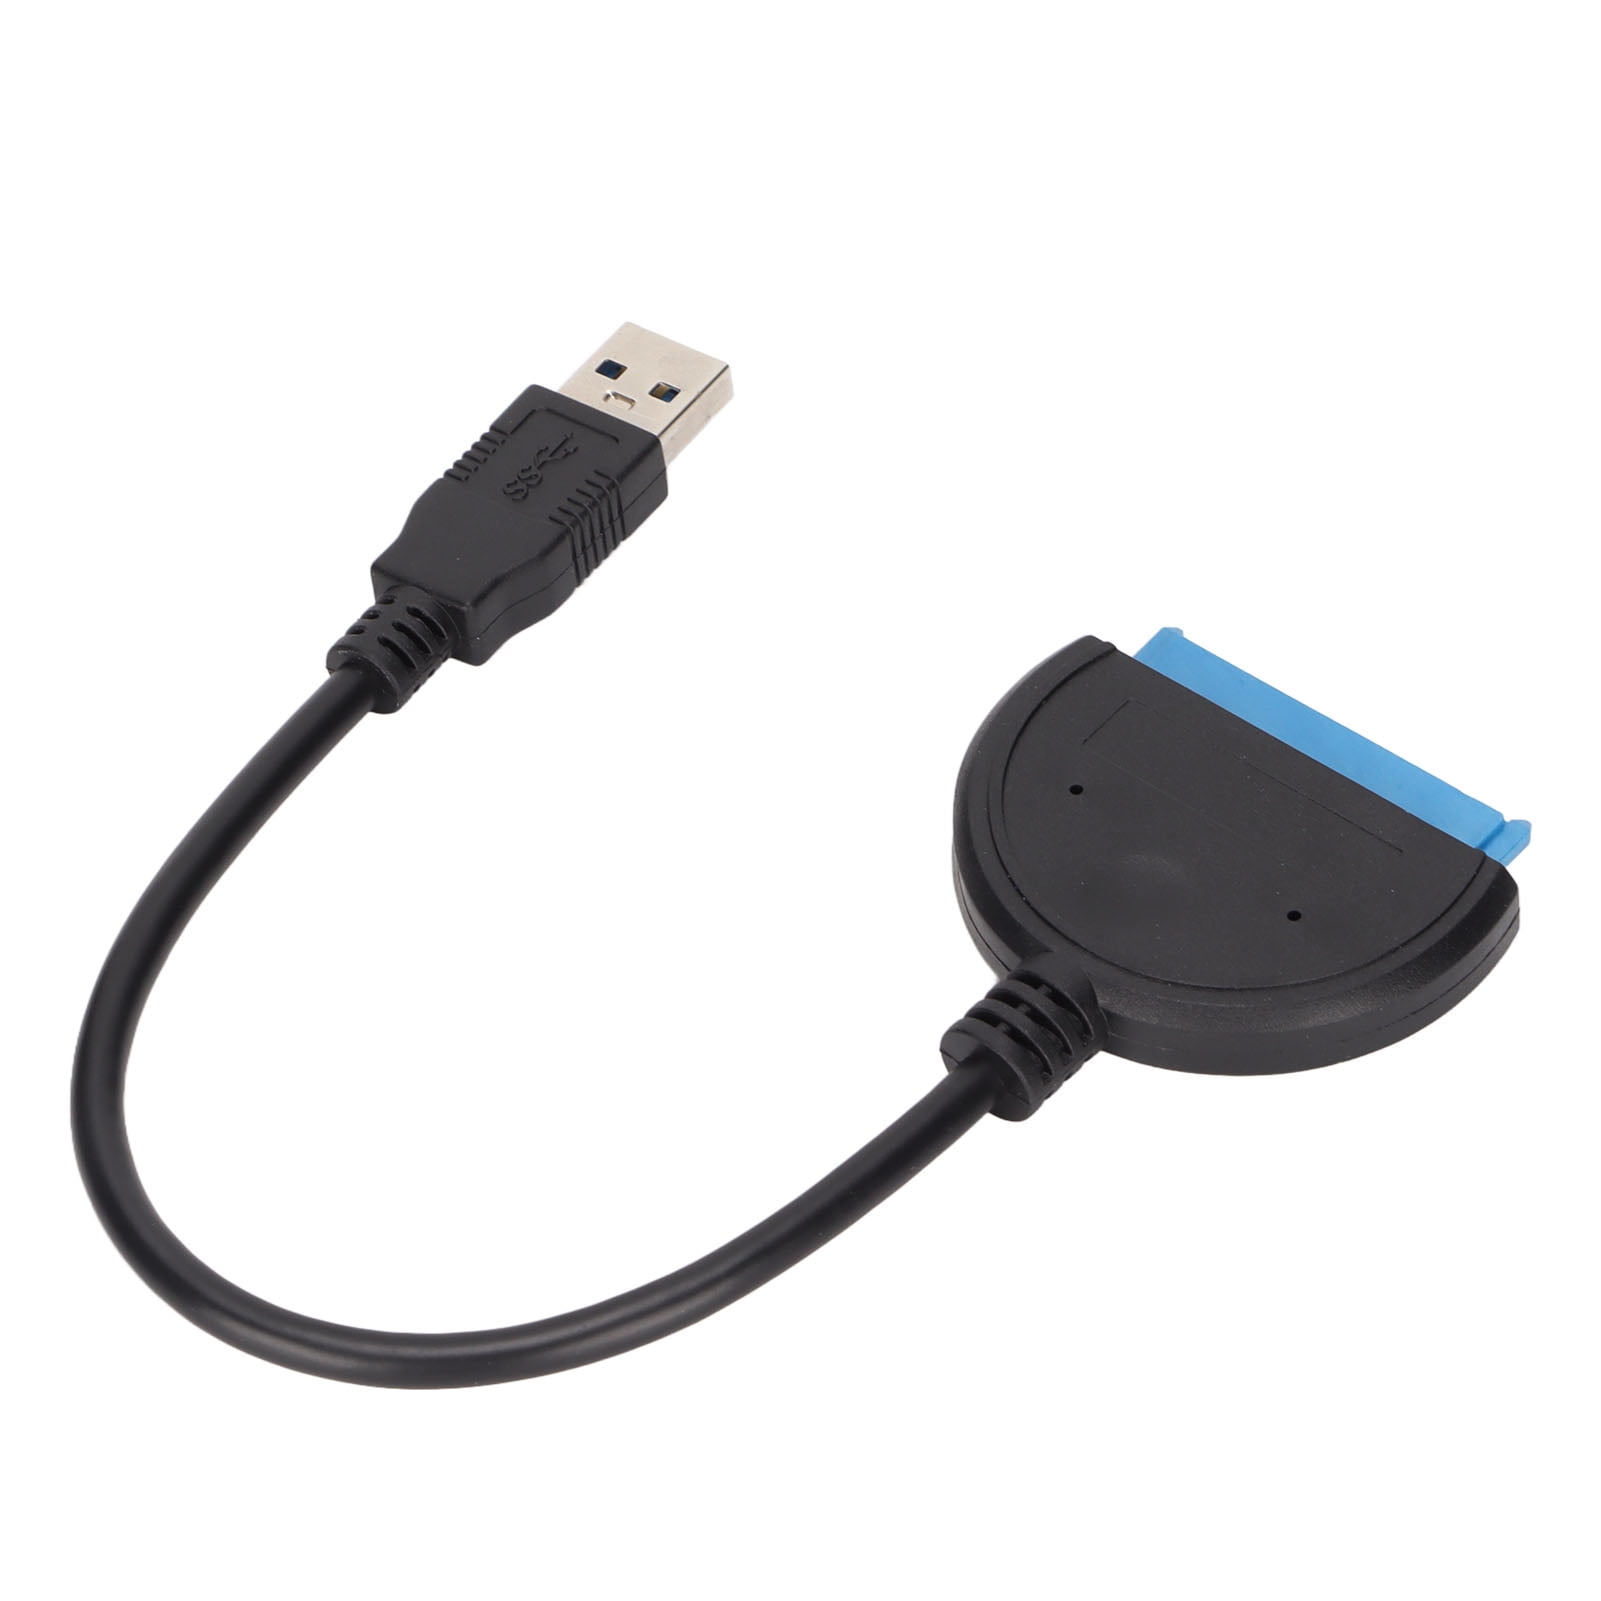 USB 3.0 to 2.5" SATA III Hard Drive Adapter Cable/UASP SATA to USB3.0 Converter 